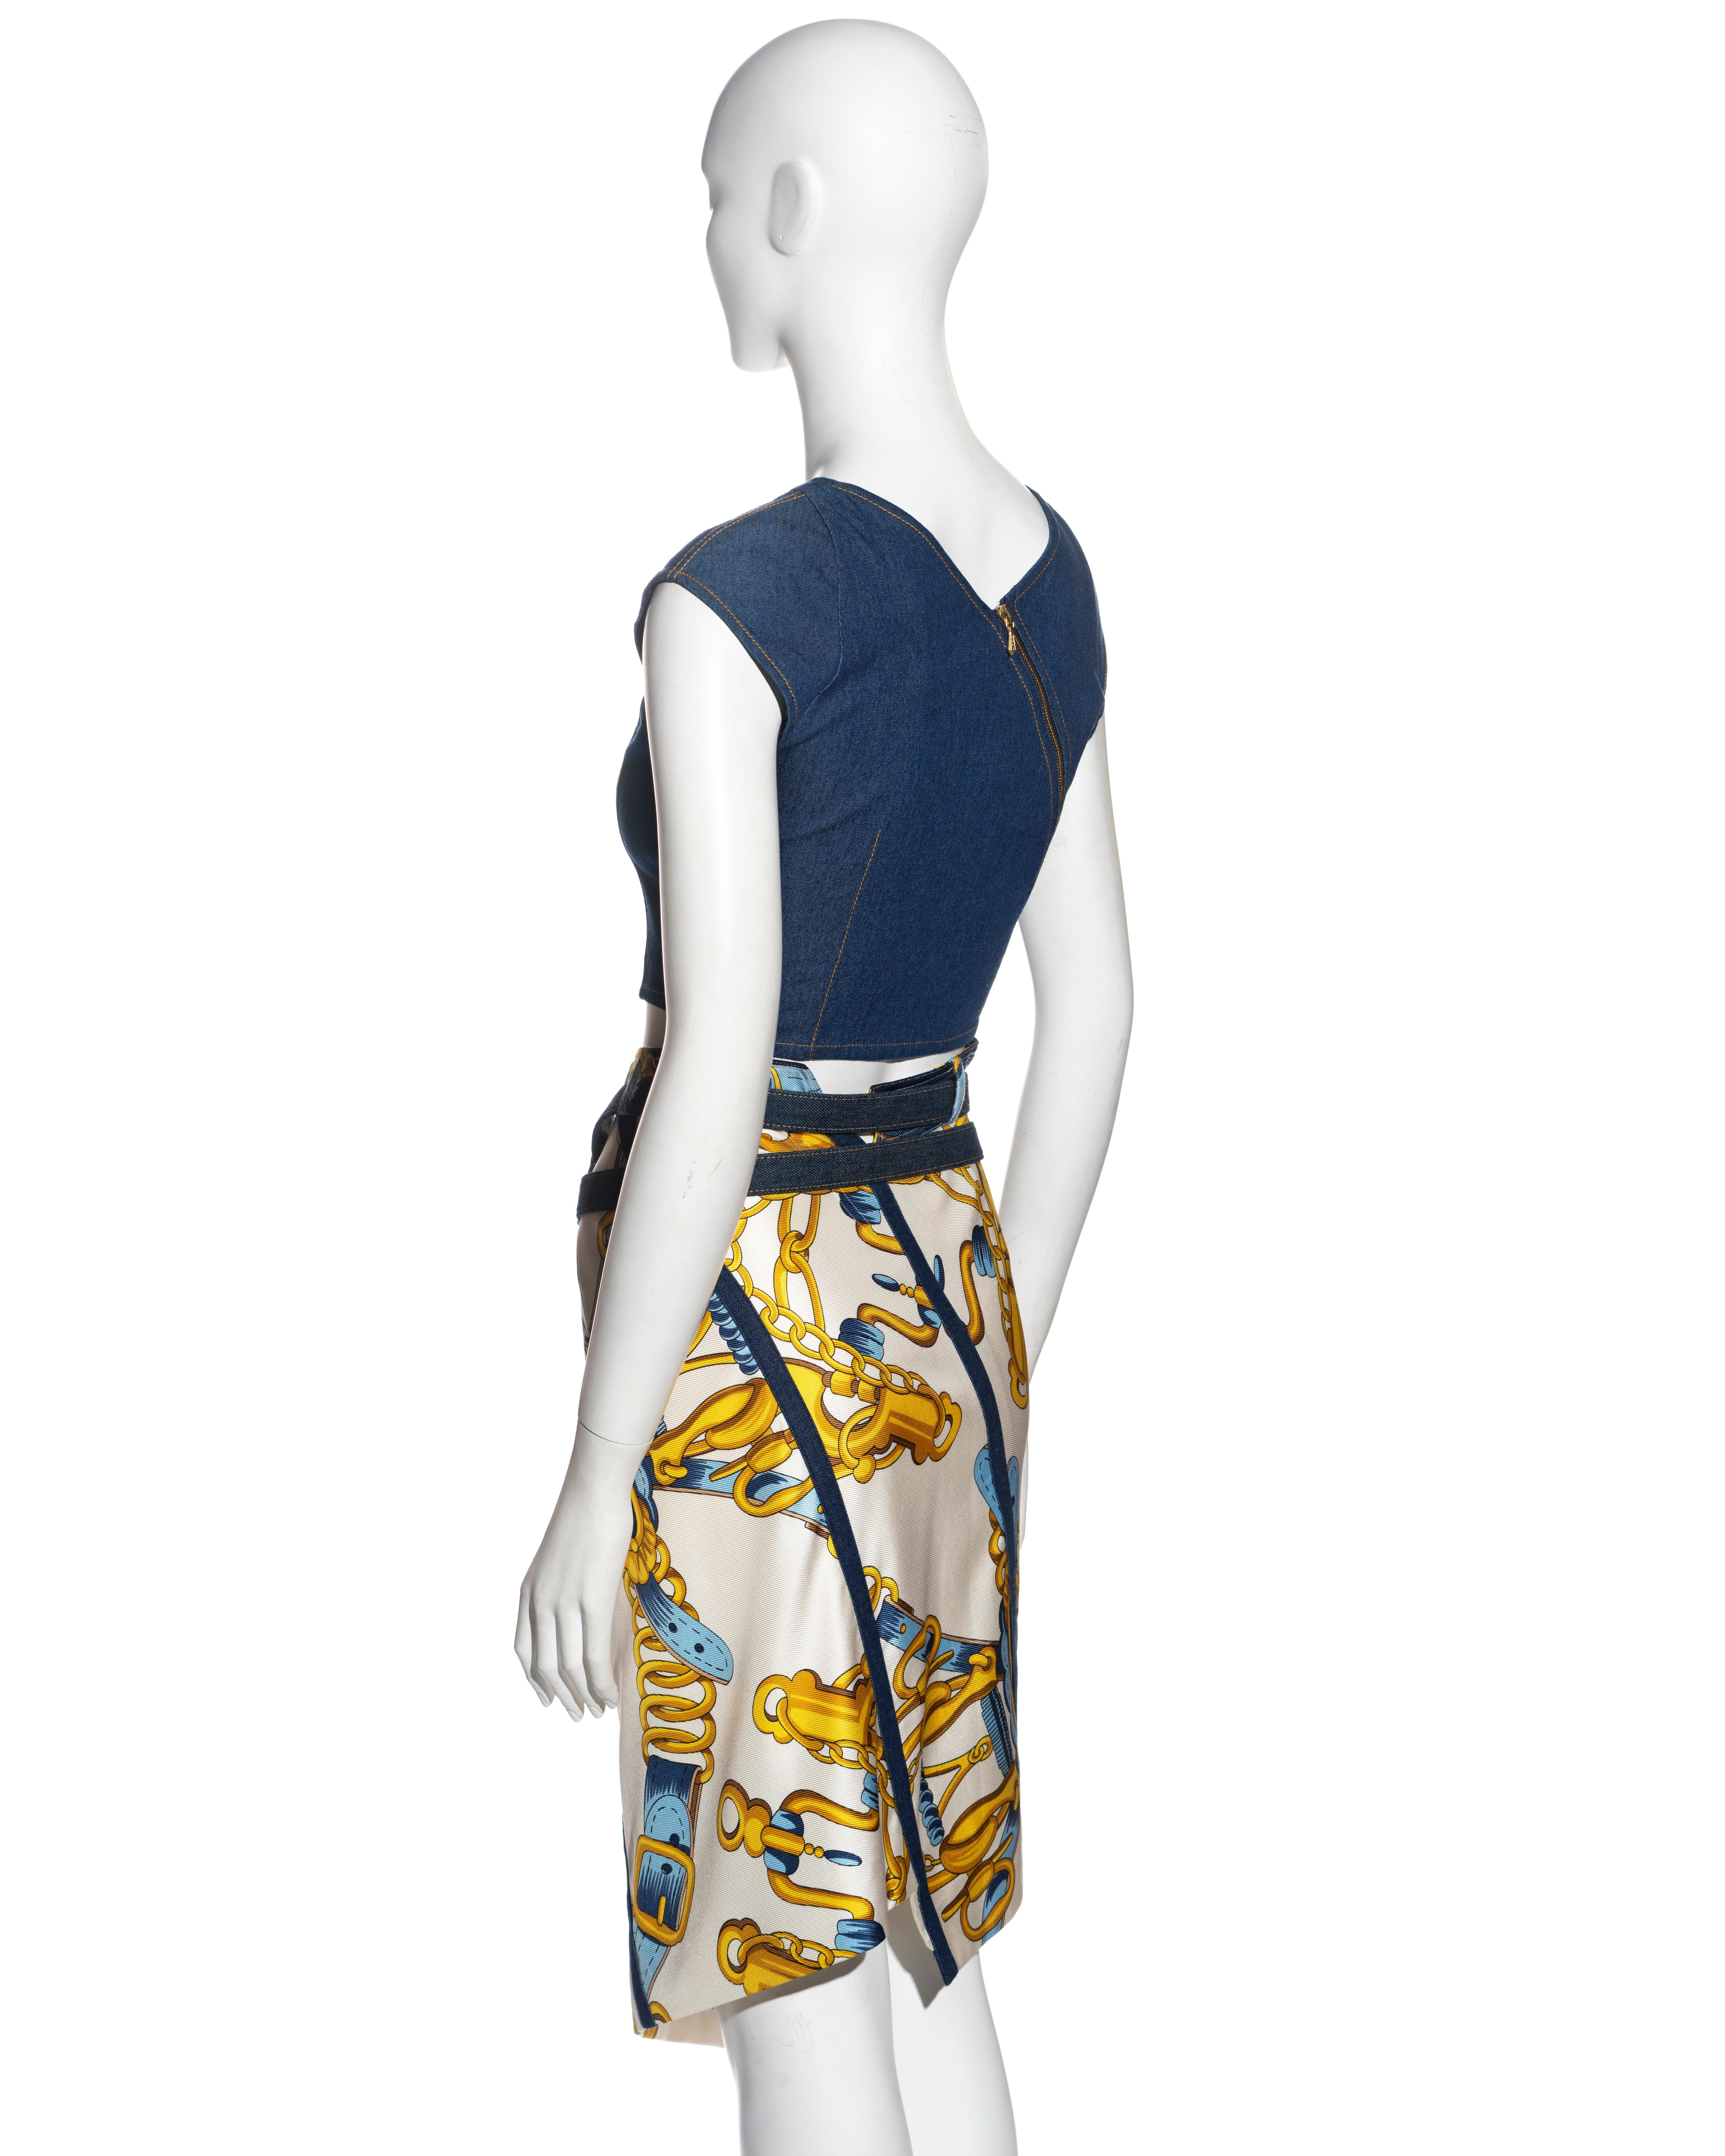 Christian Dior by John Galliano skirt, top and belt ensemble, ss 2000 6